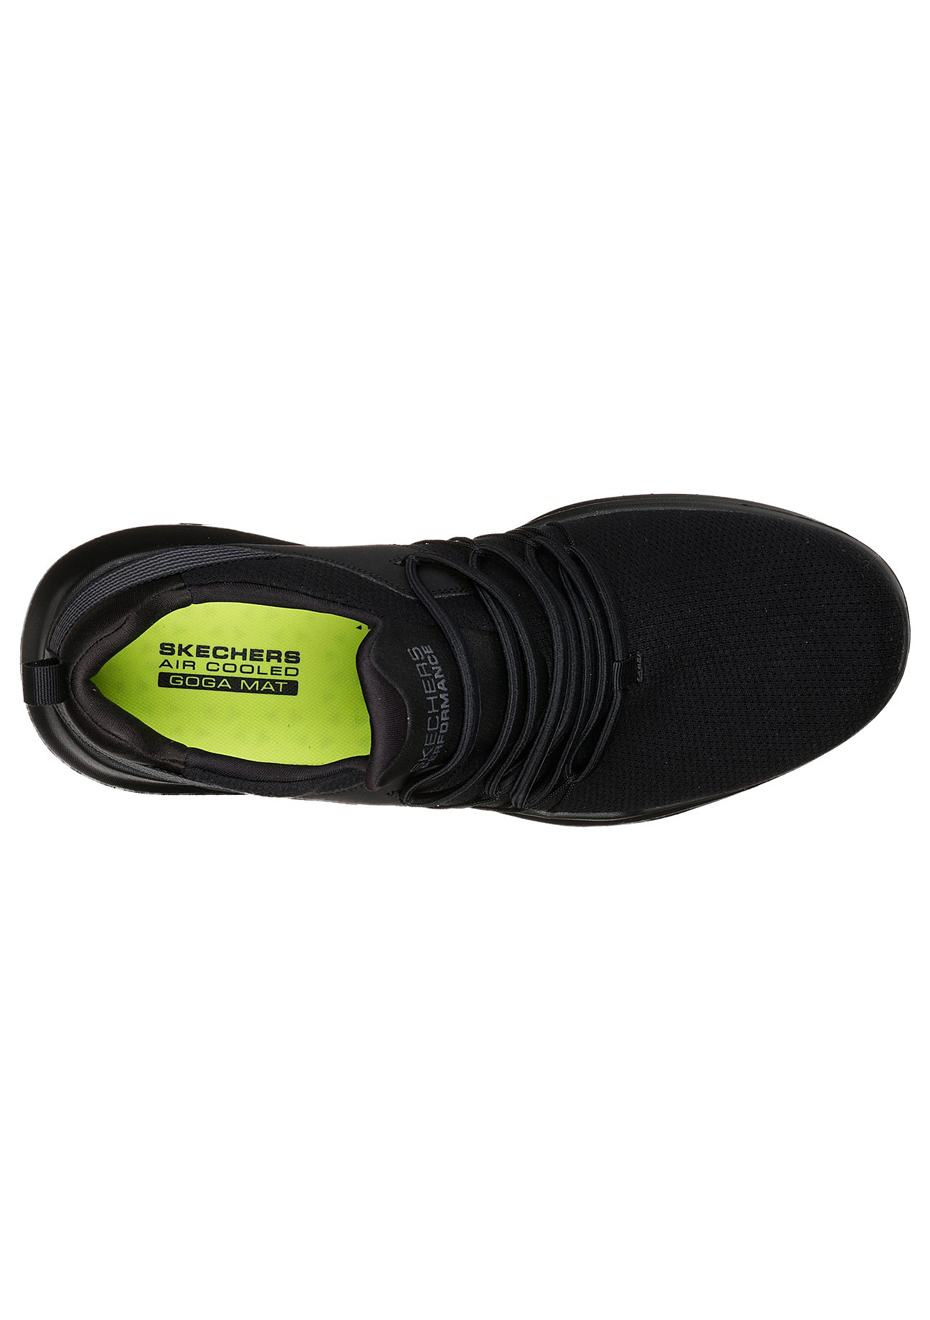 skechers air cooled goga mat shoes